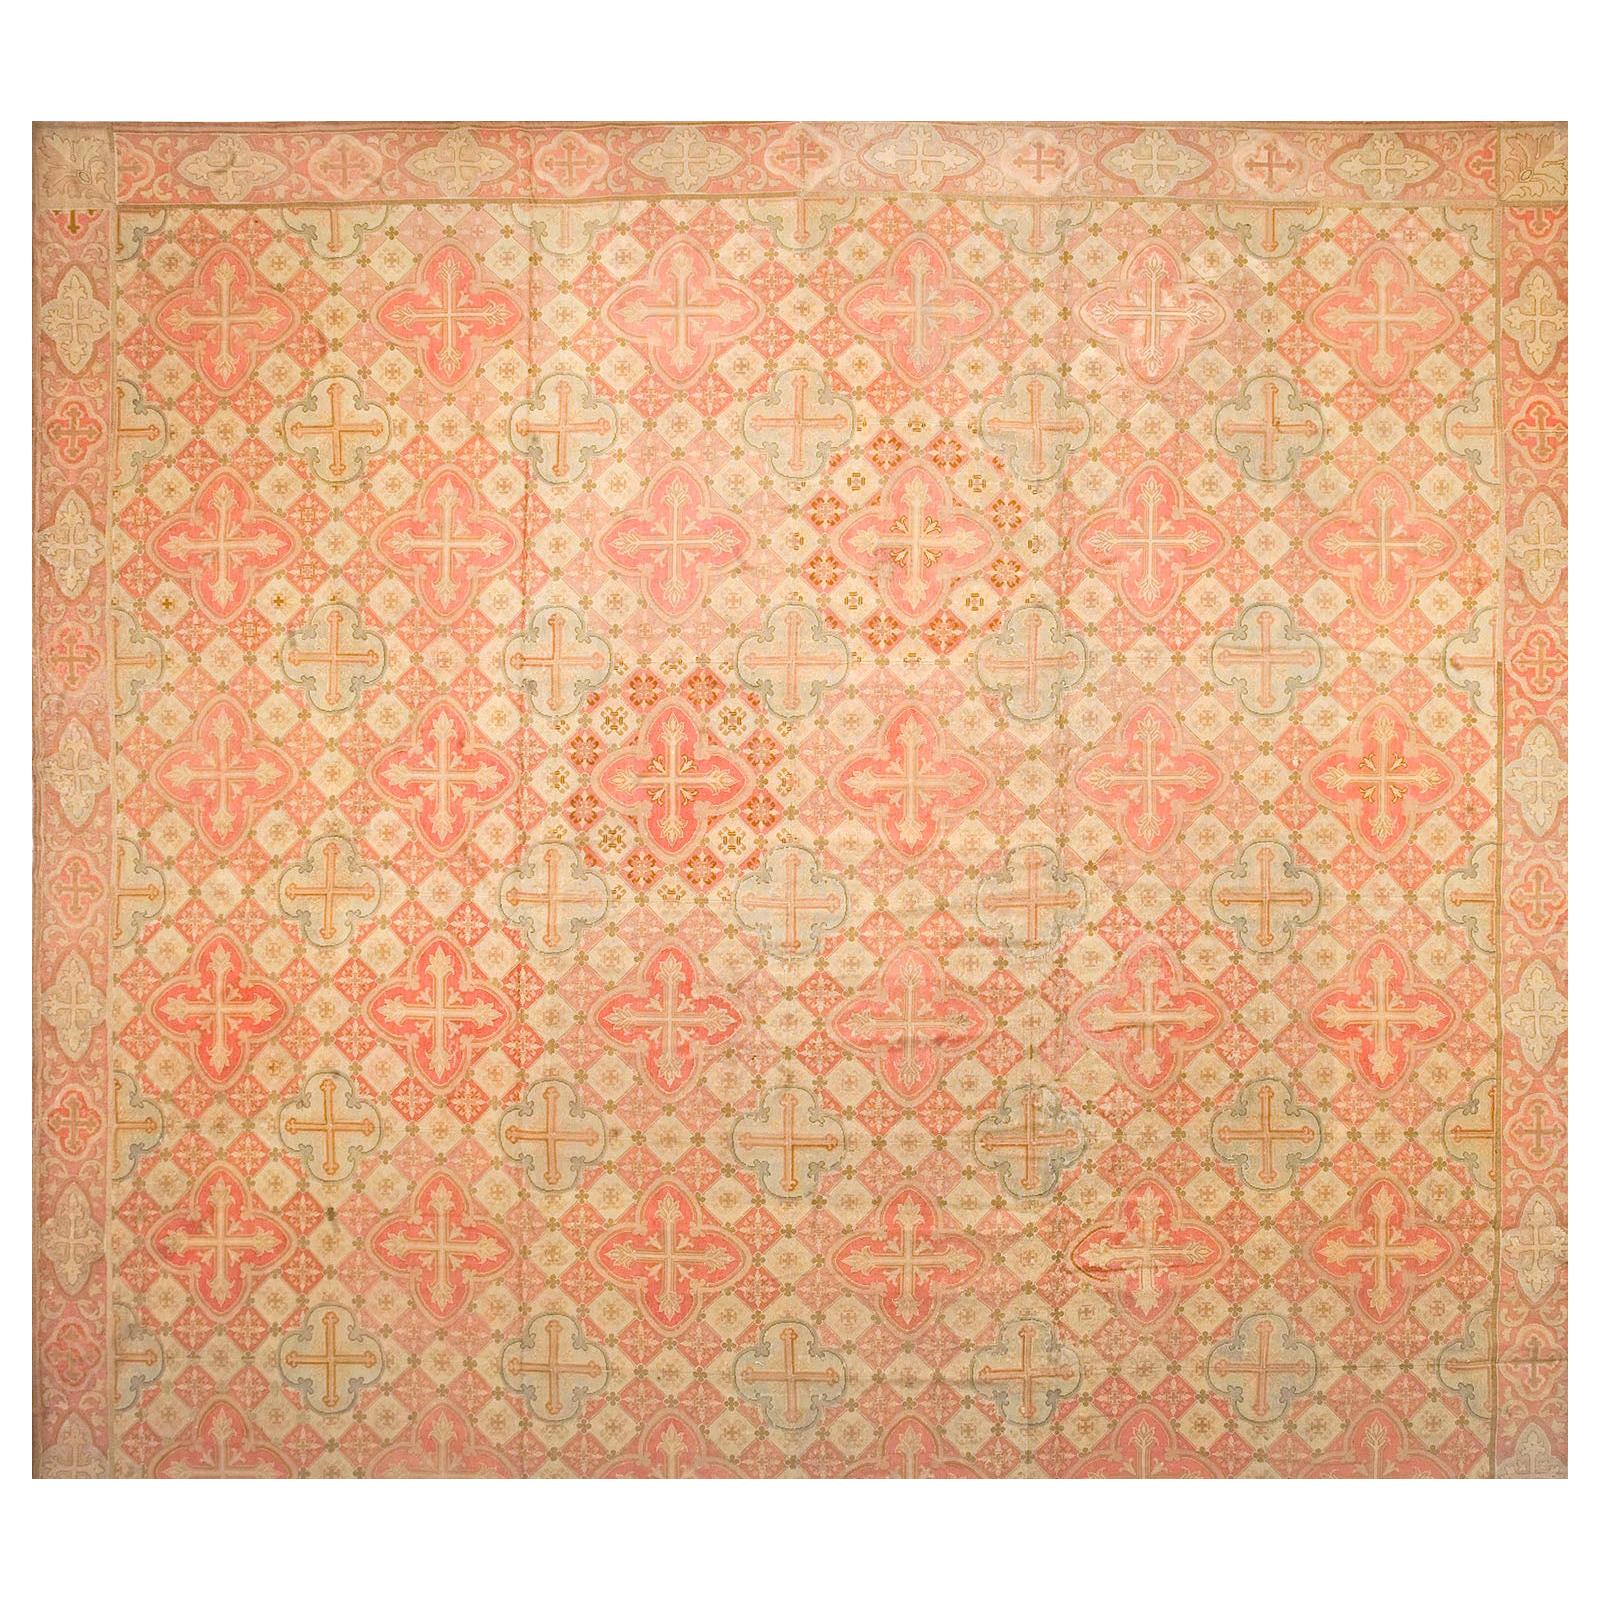 Antique European needlepoint rug, size: 14'4